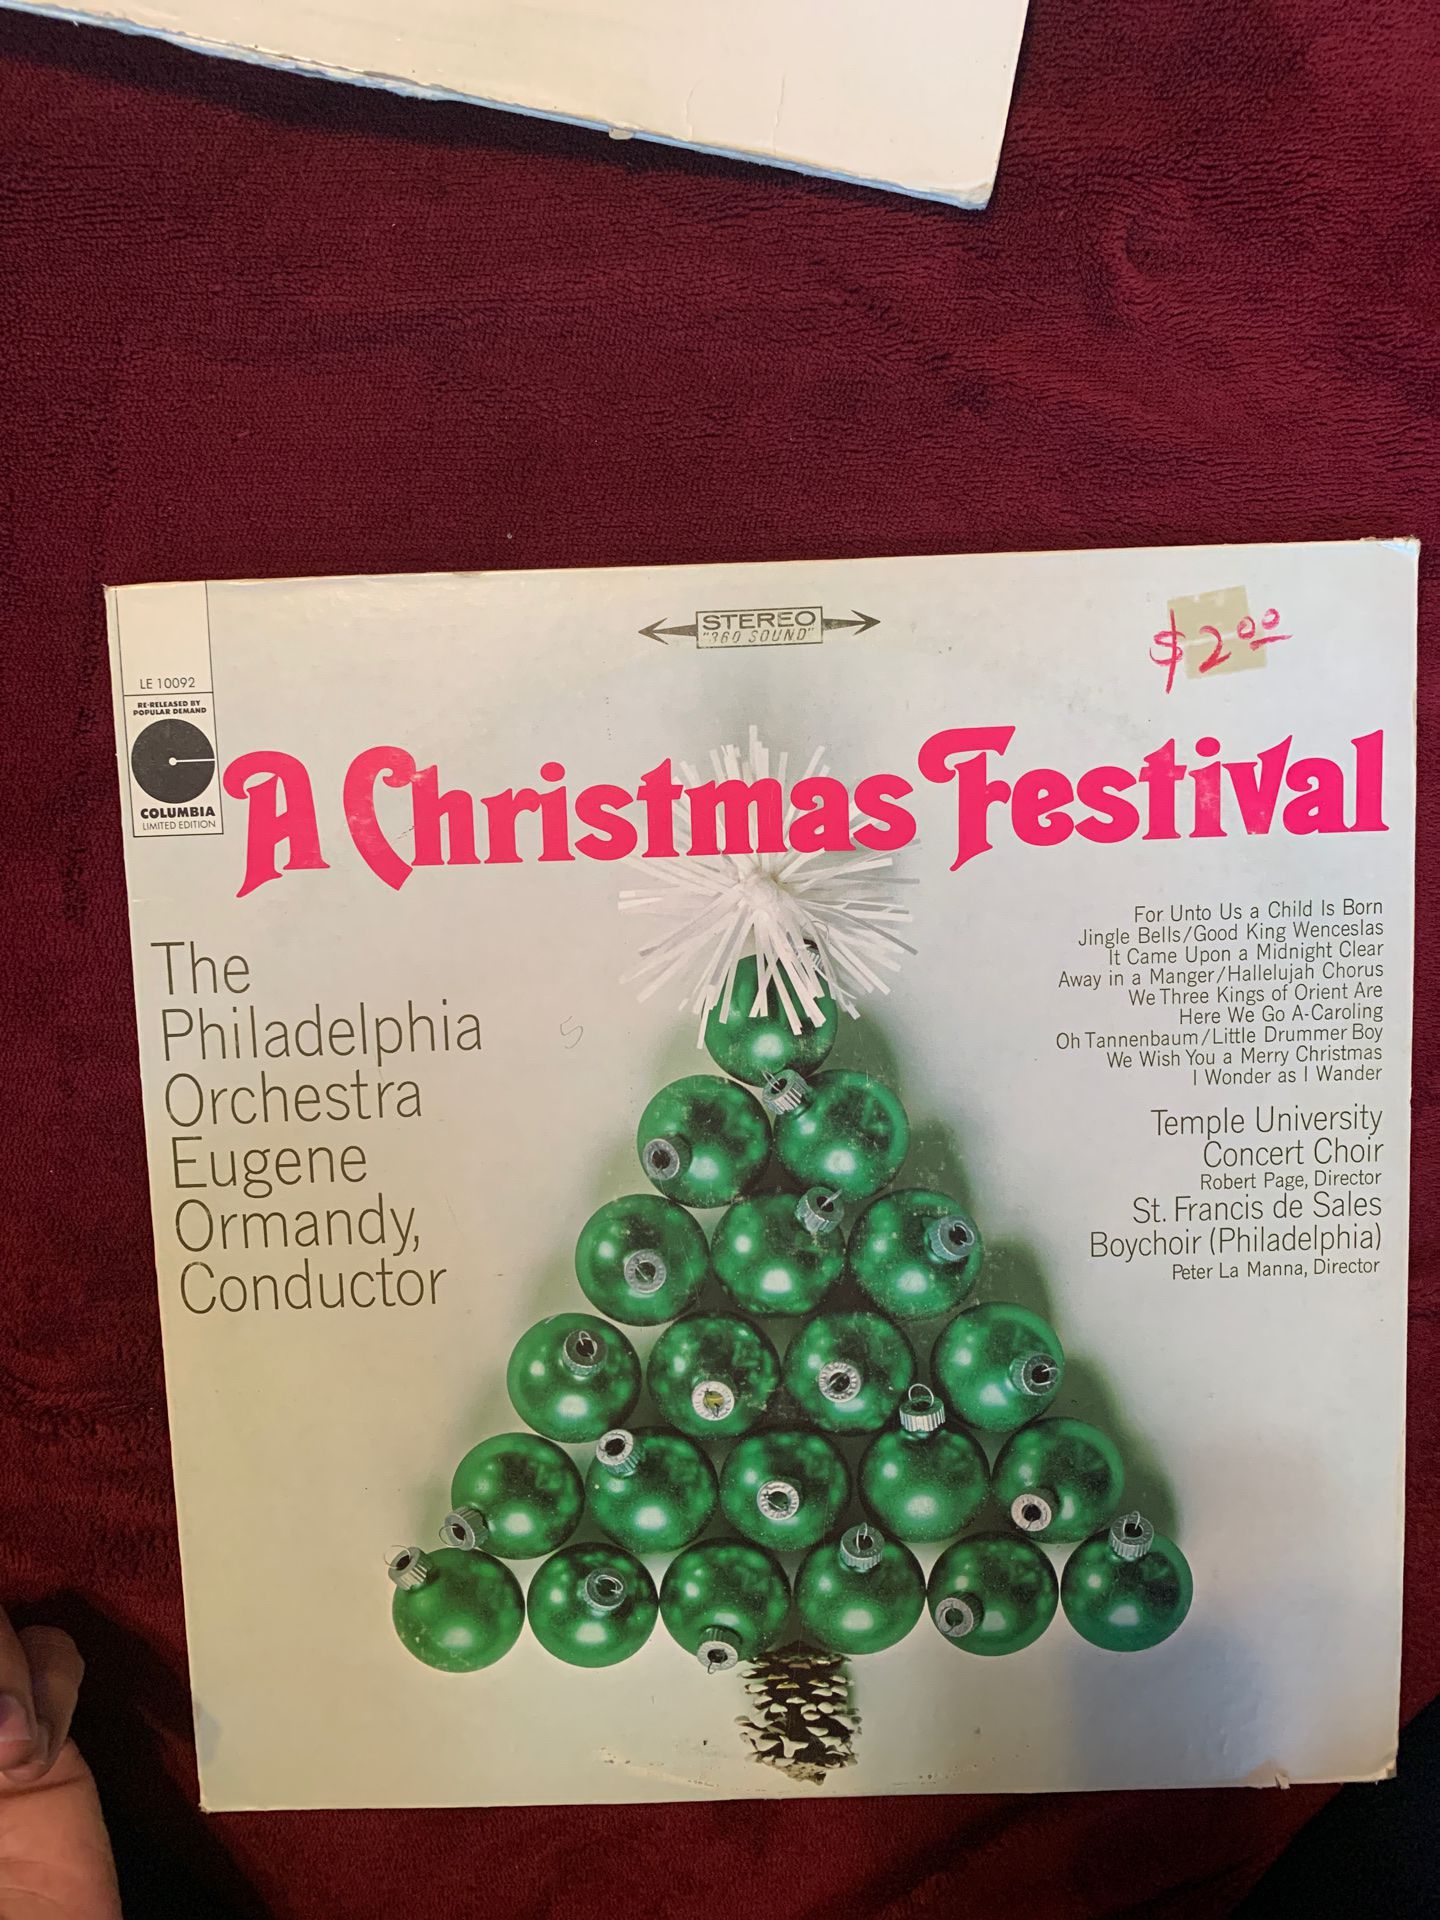 A Christmas festival LE10092 vinyl